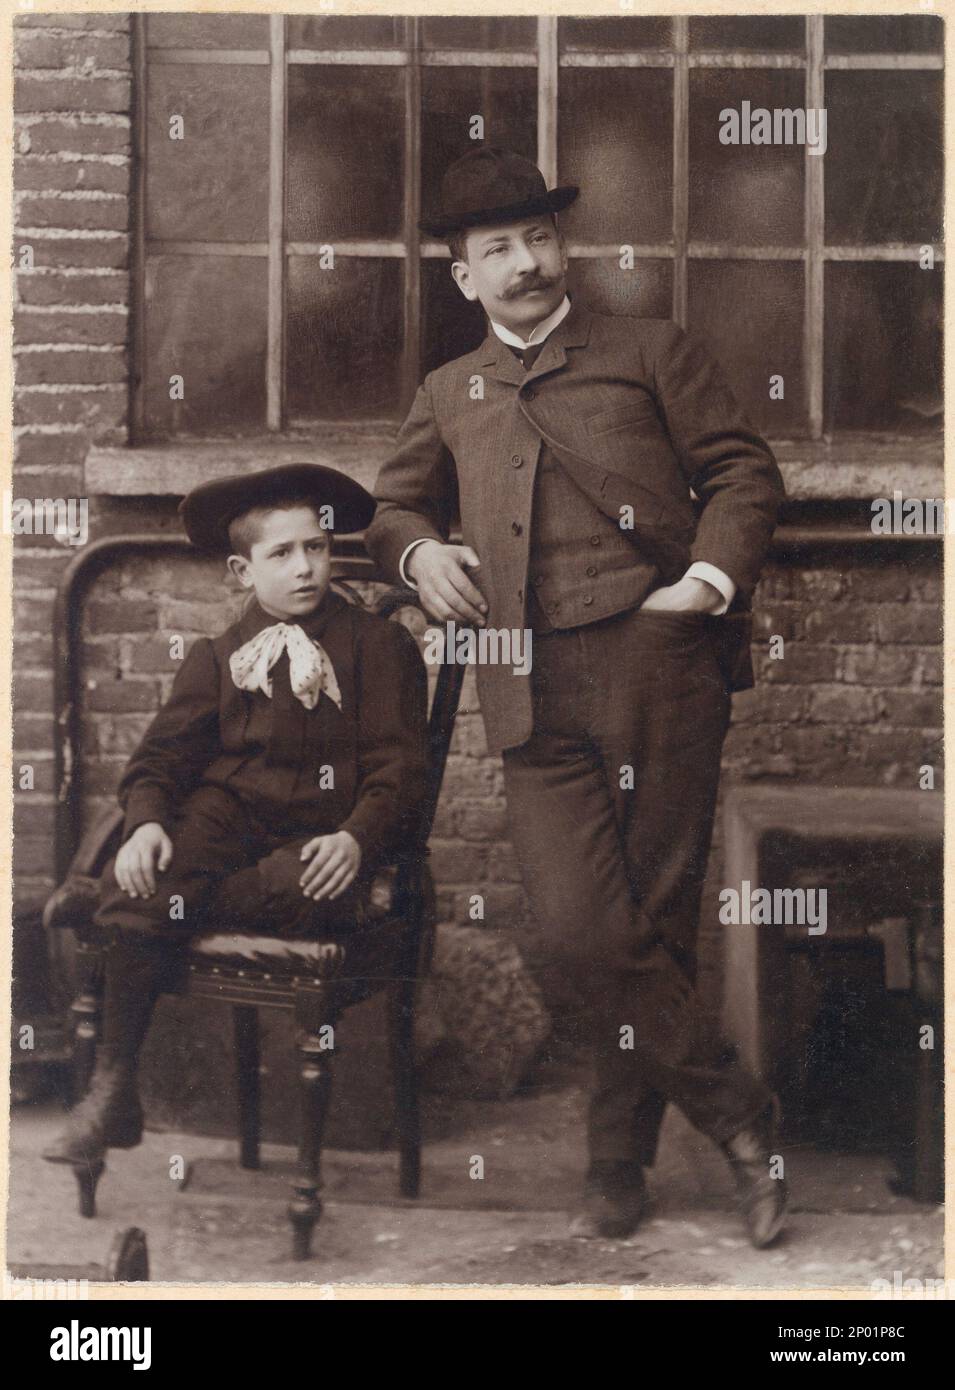 1900 environ , Legnano , Italie : Un père avec son fils - PADRE e FIGLIO - parenti - FAMIGLIA - FAMILLE - COPPIA - COUPLE - duo - cravatta - cravate - collier - colletto - cappello - chapeau - bambino - enfant - enfants - BELLE EPOQUE ---- Archivio GBB Banque D'Images